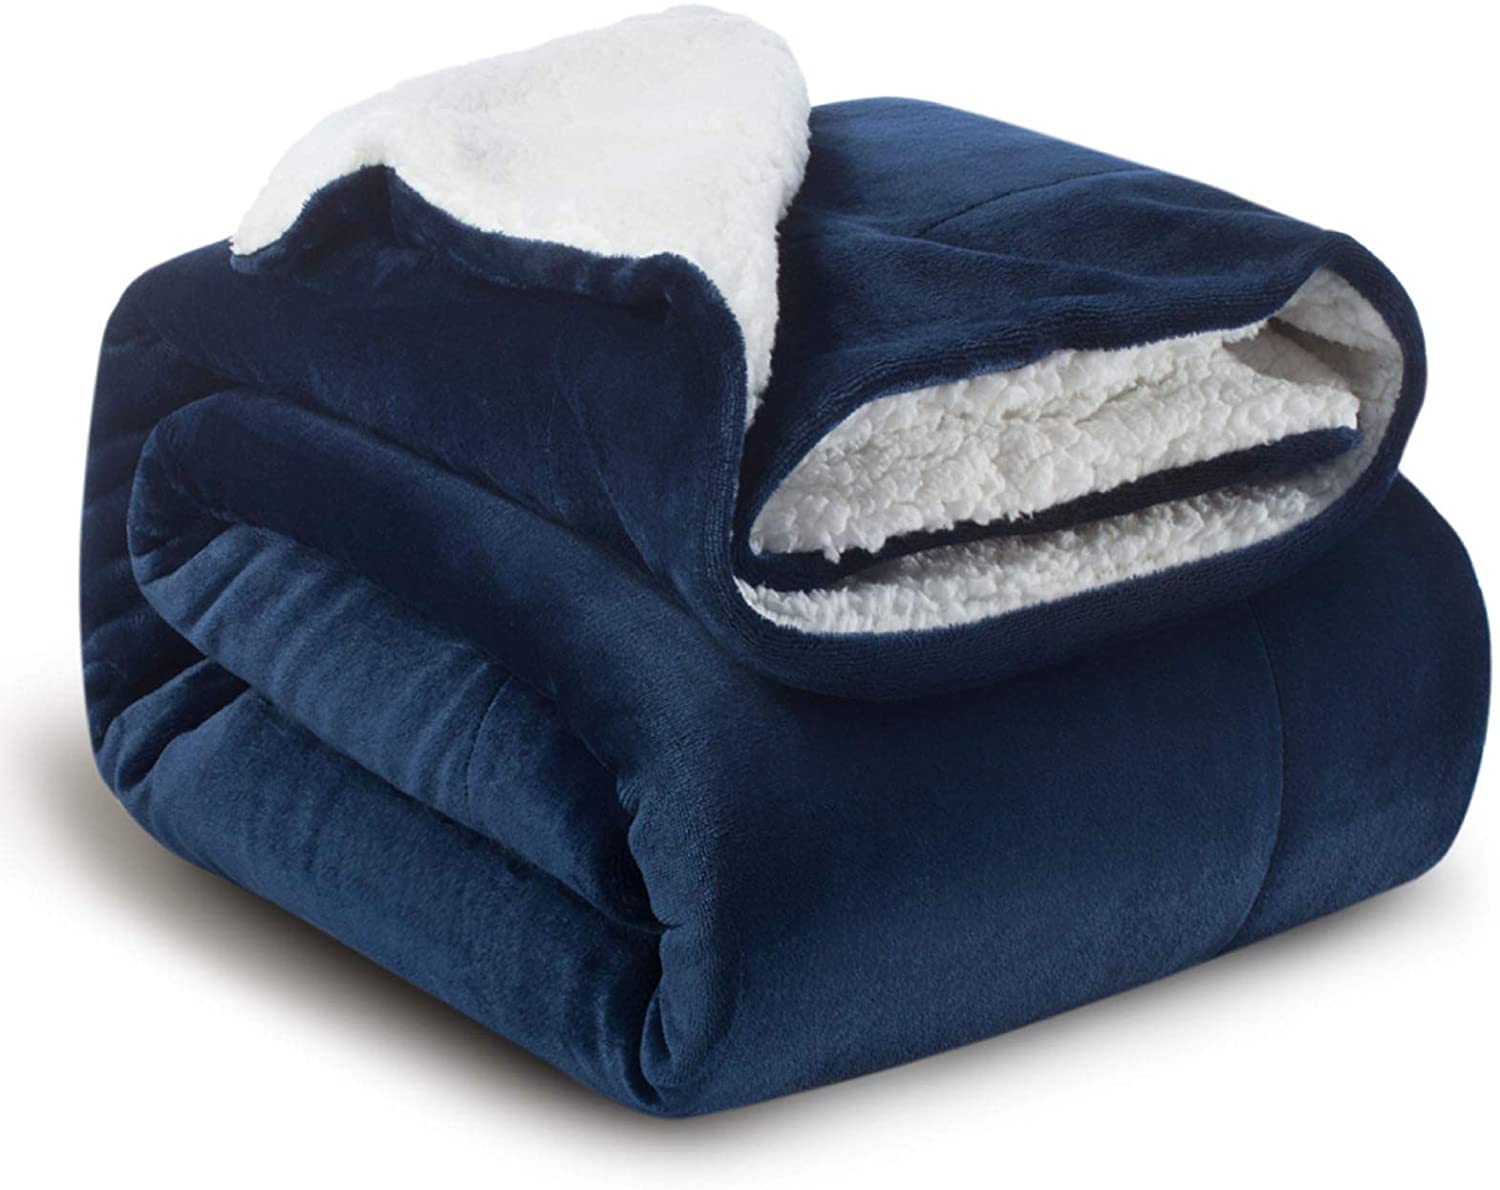 Bedsure Fuzzy Textured Reversible Sherpa Throw Blanket 